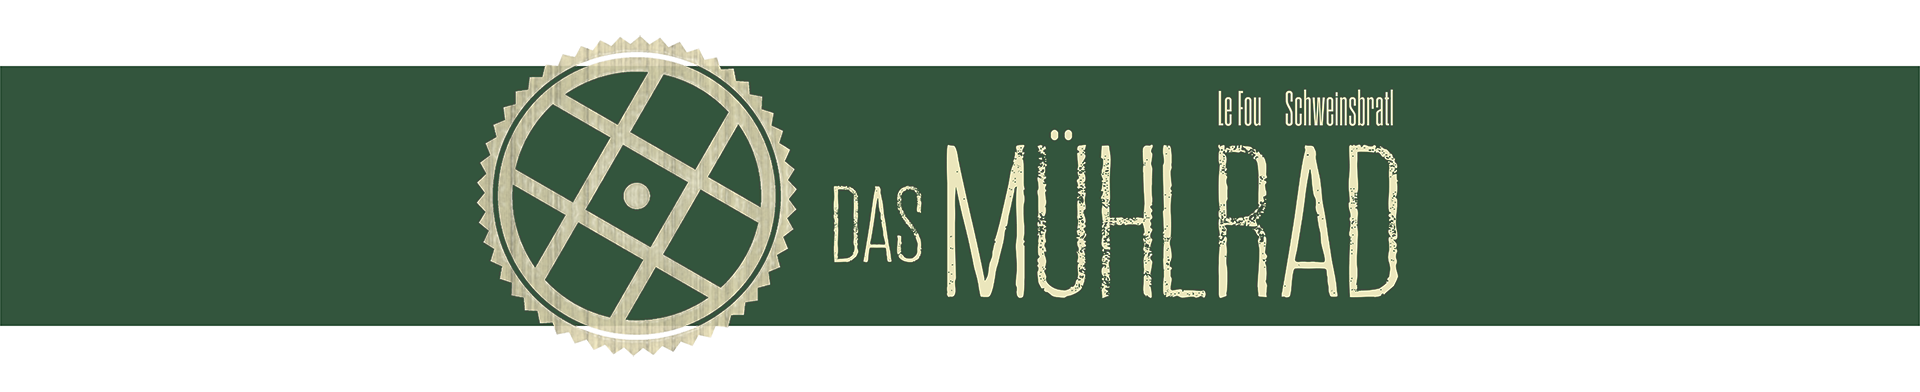 Logo Das Mühlrad02